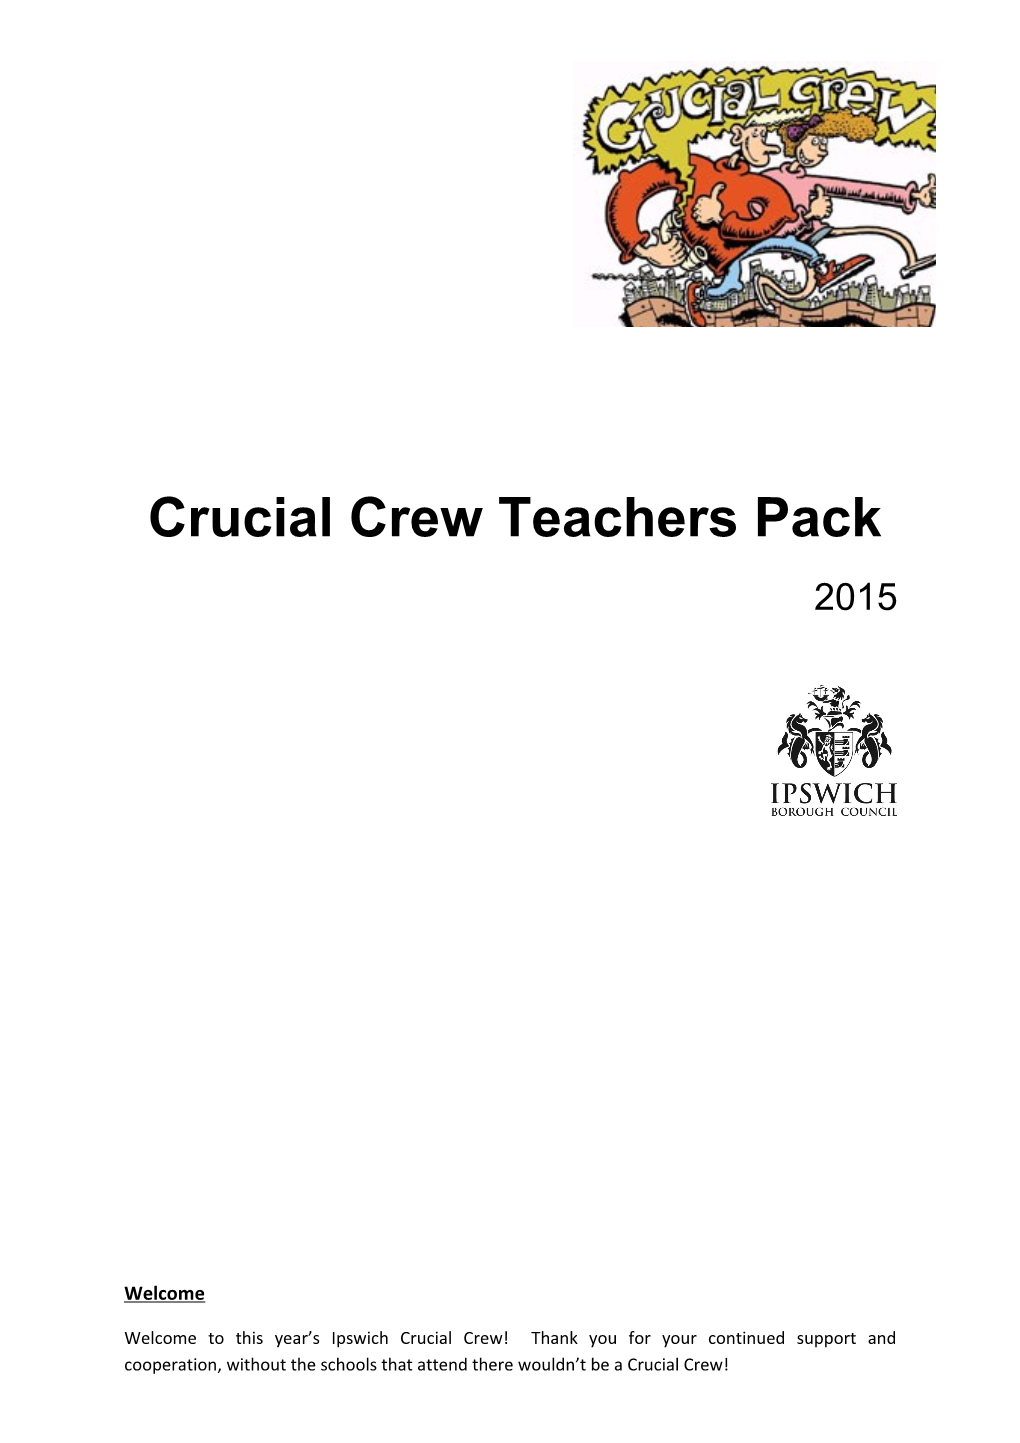 Ipswich Crucial Crew